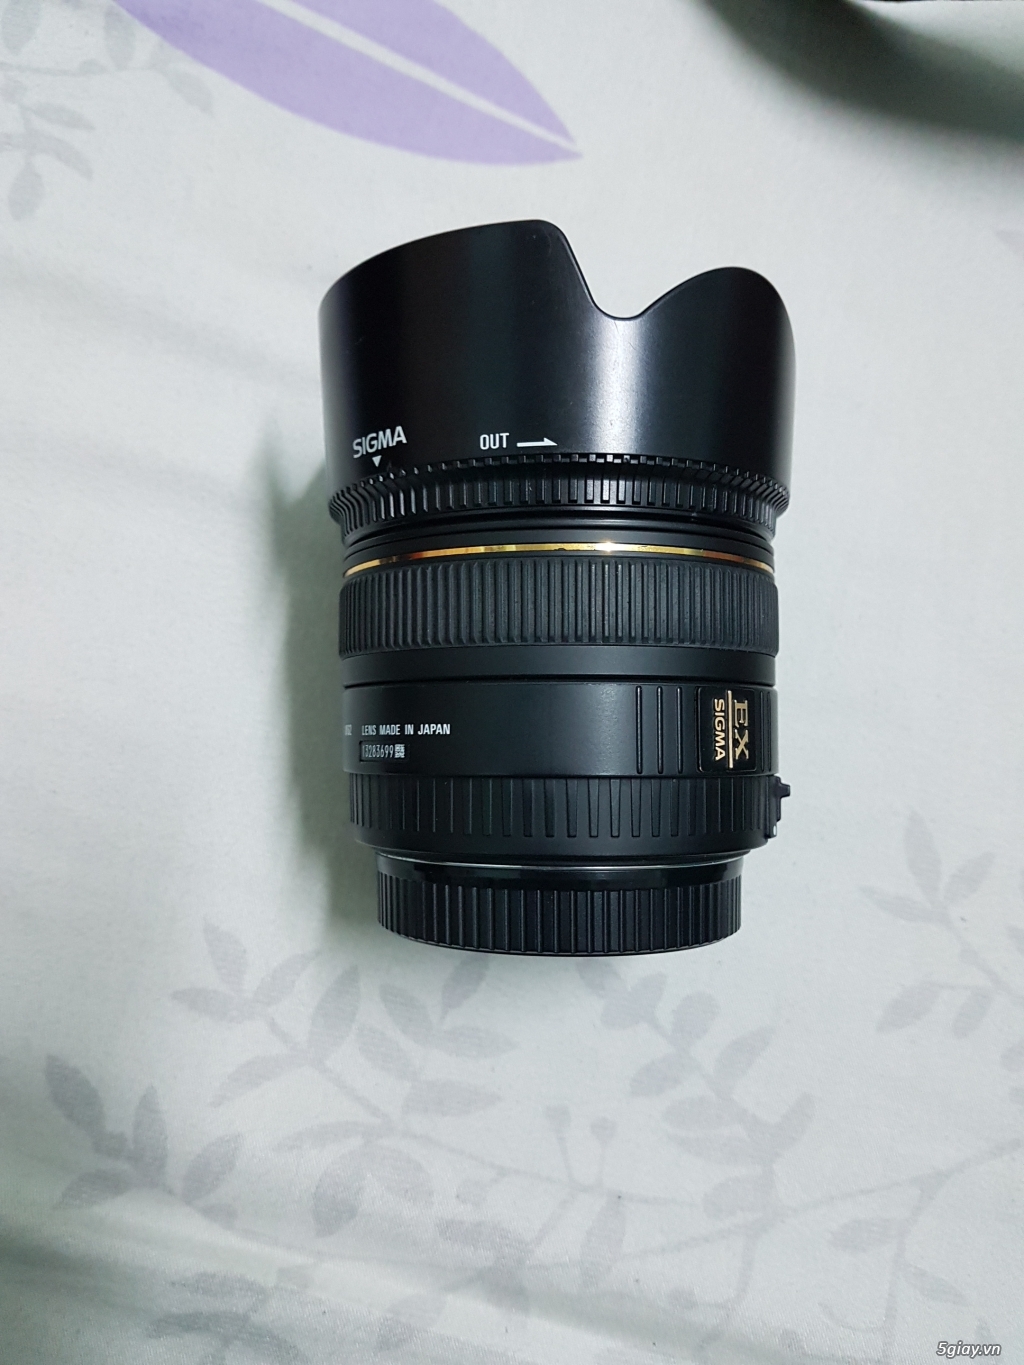 Canon 60D, Lens Sigma 30 f1.4, 55-250mm IS II, flash Nissin di622 II - 7